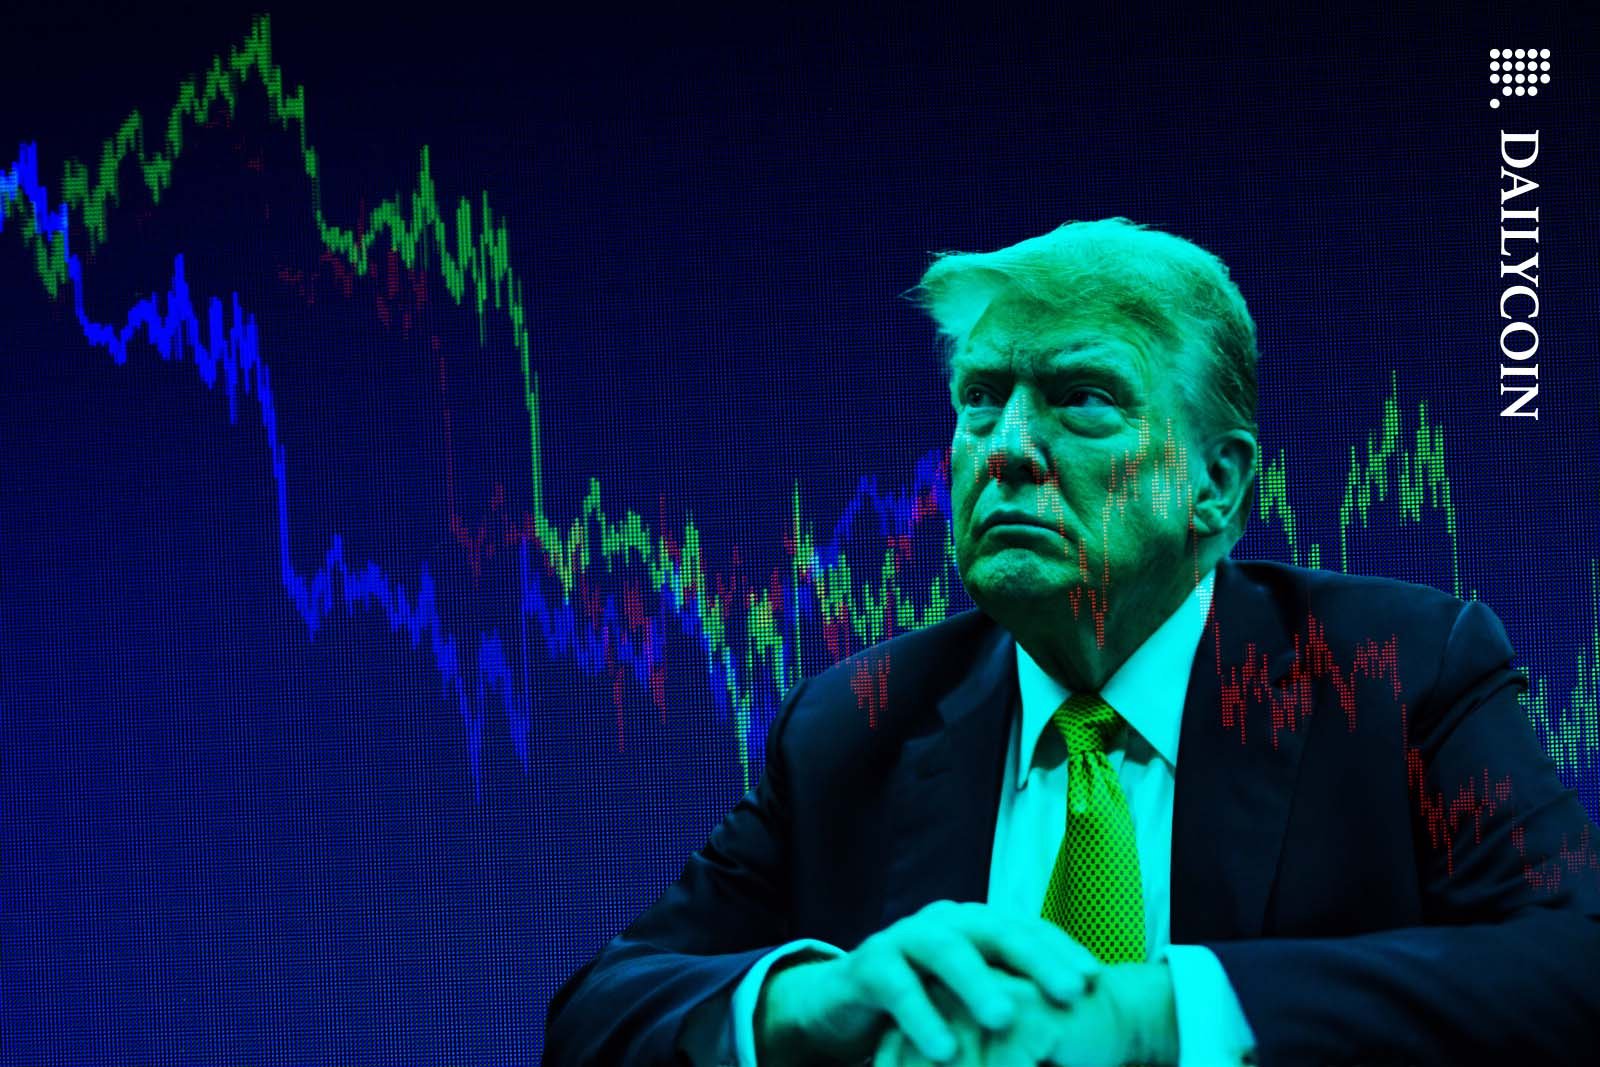 Donald trump looking at some negative charts.